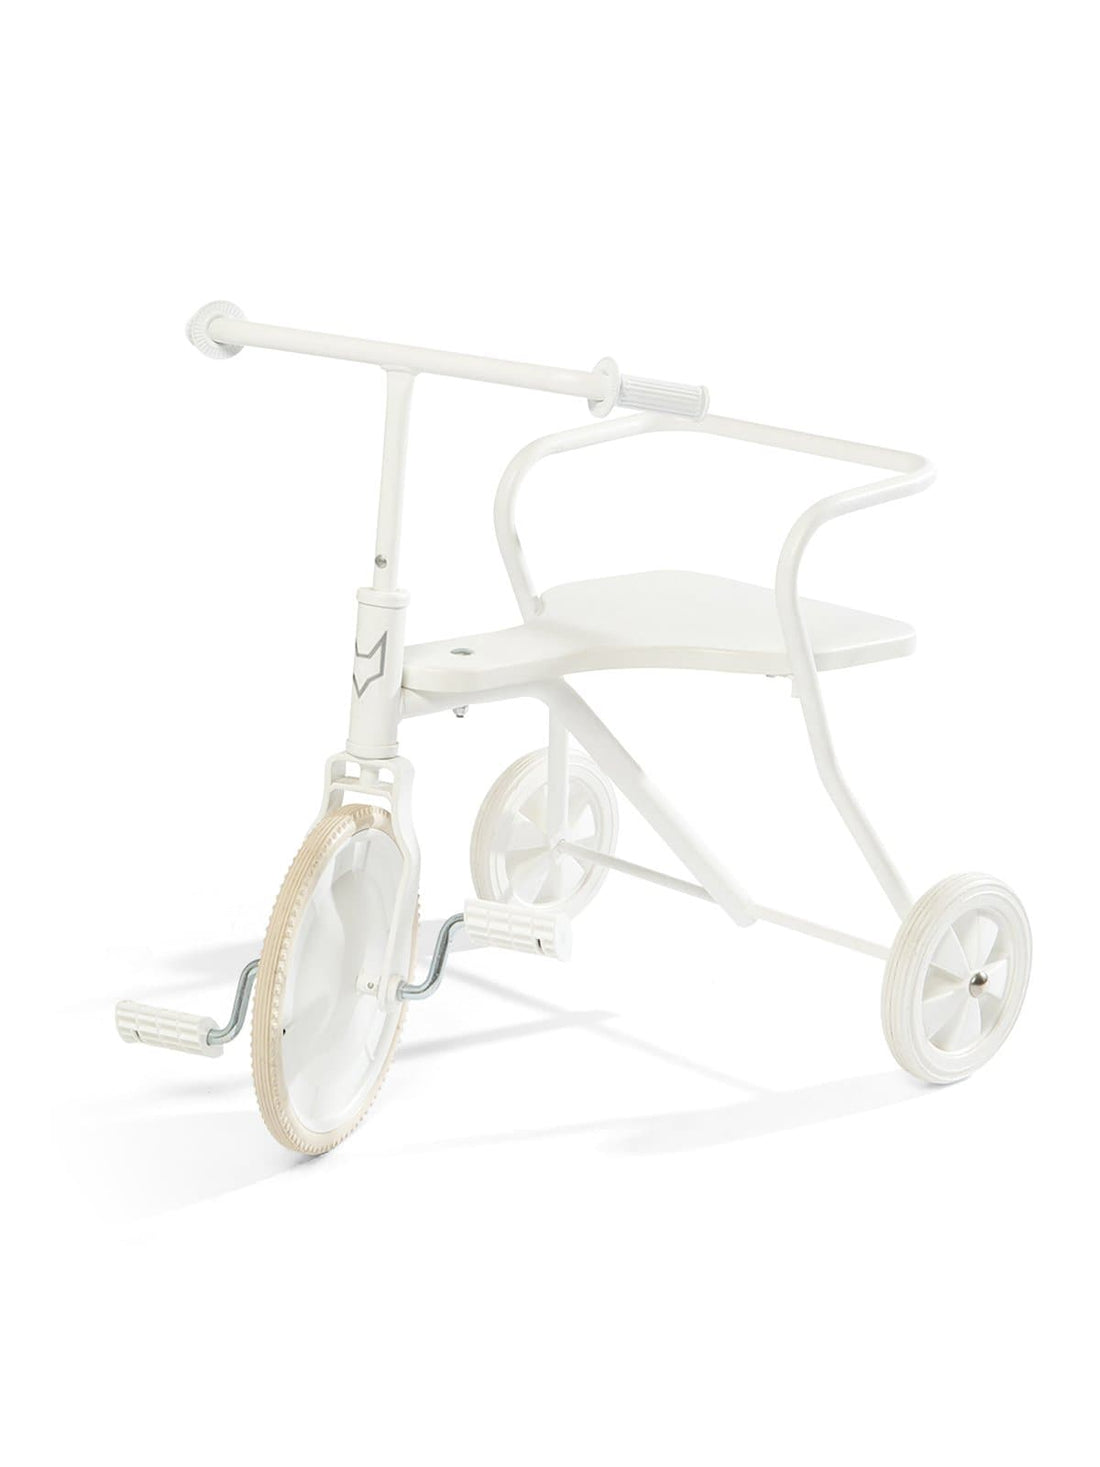 Foxrider Tricycle, White